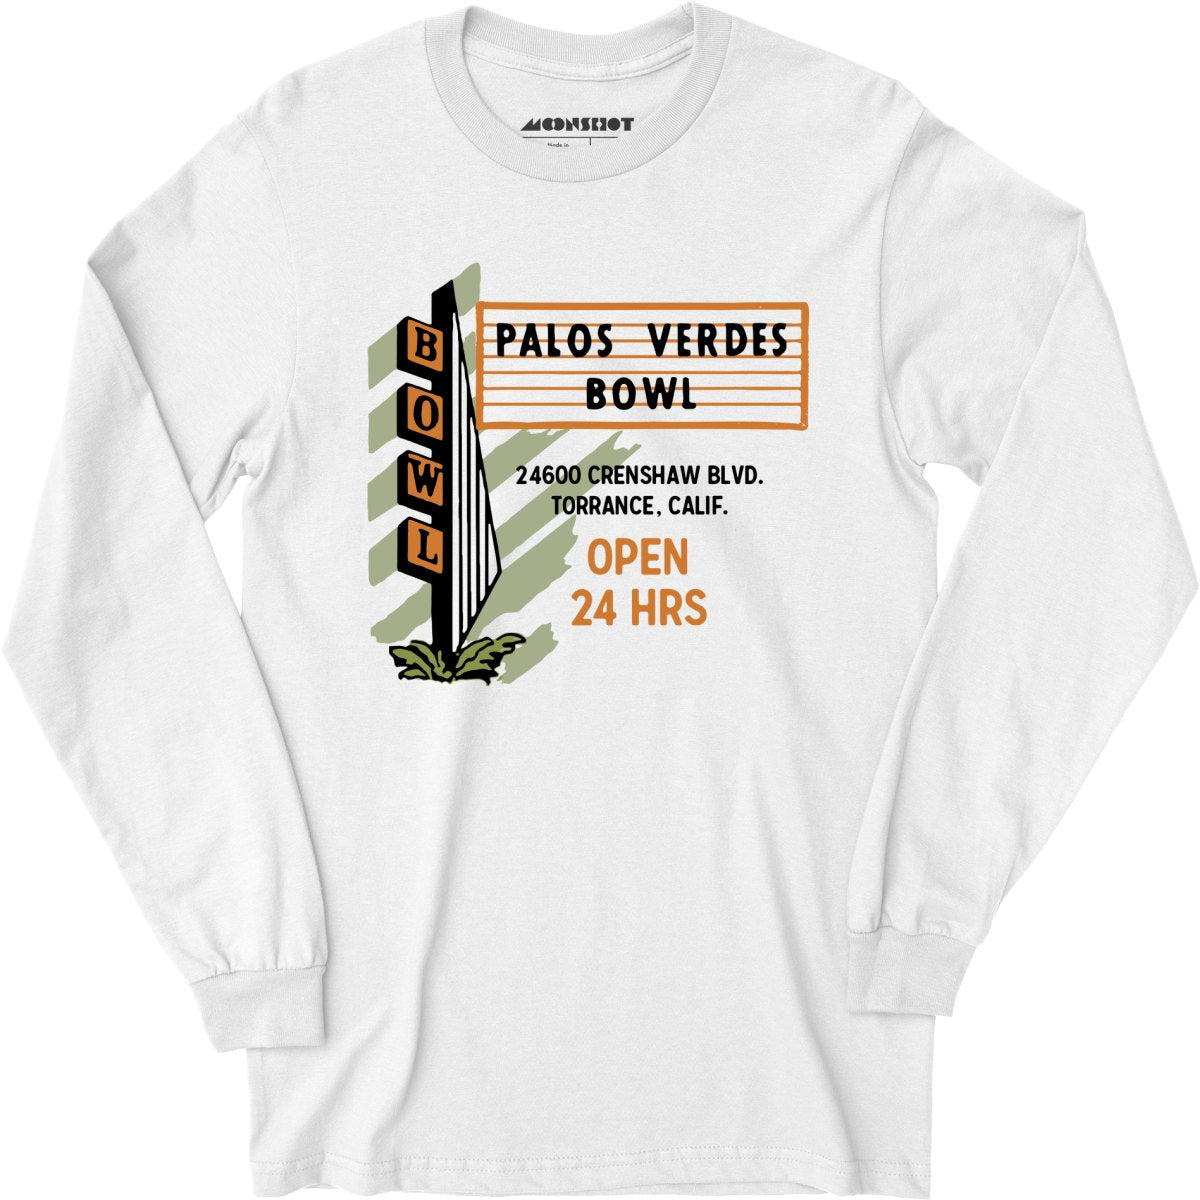 Palos Verdes Bowl - Torrance, CA - Vintage Bowling Alley - Long Sleeve T-Shirt